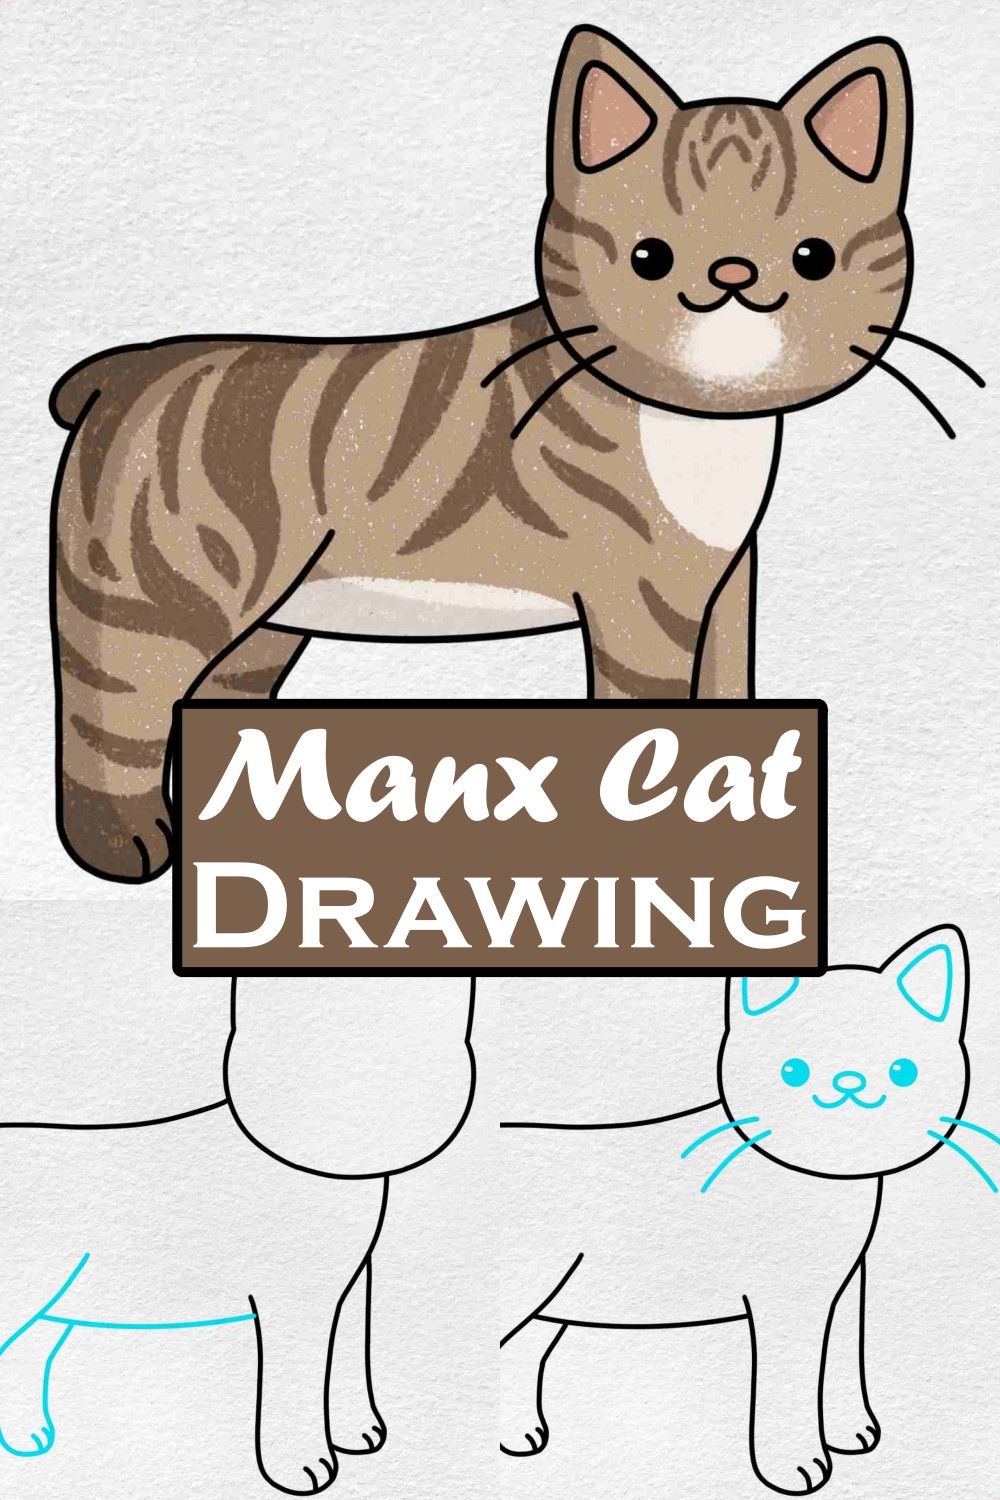 Manx Cat Drawing